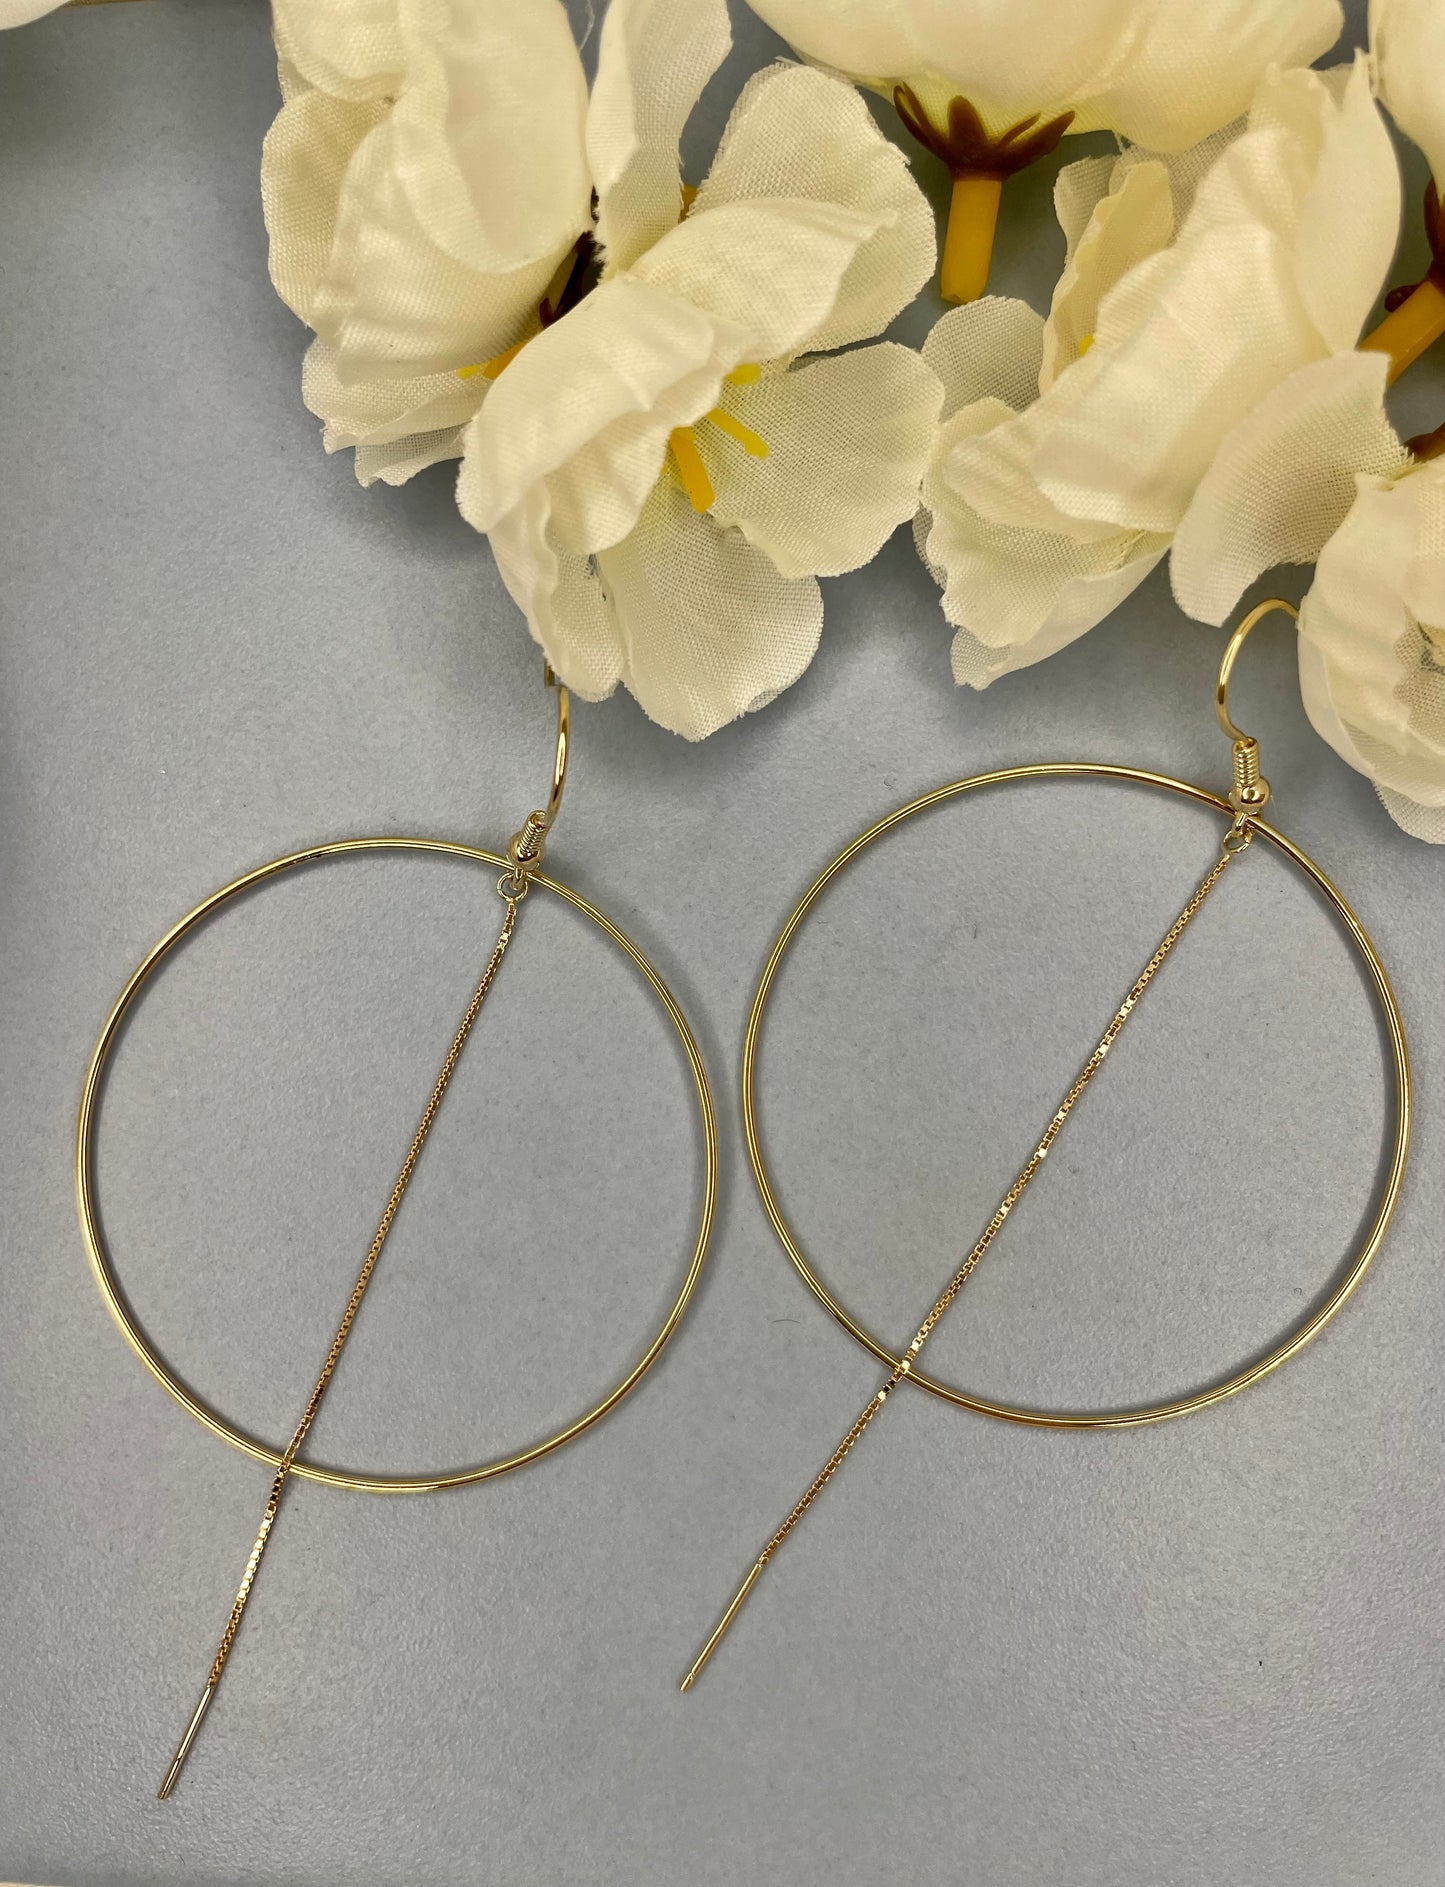 9k Gold Hoop Earrings with drop chain detail